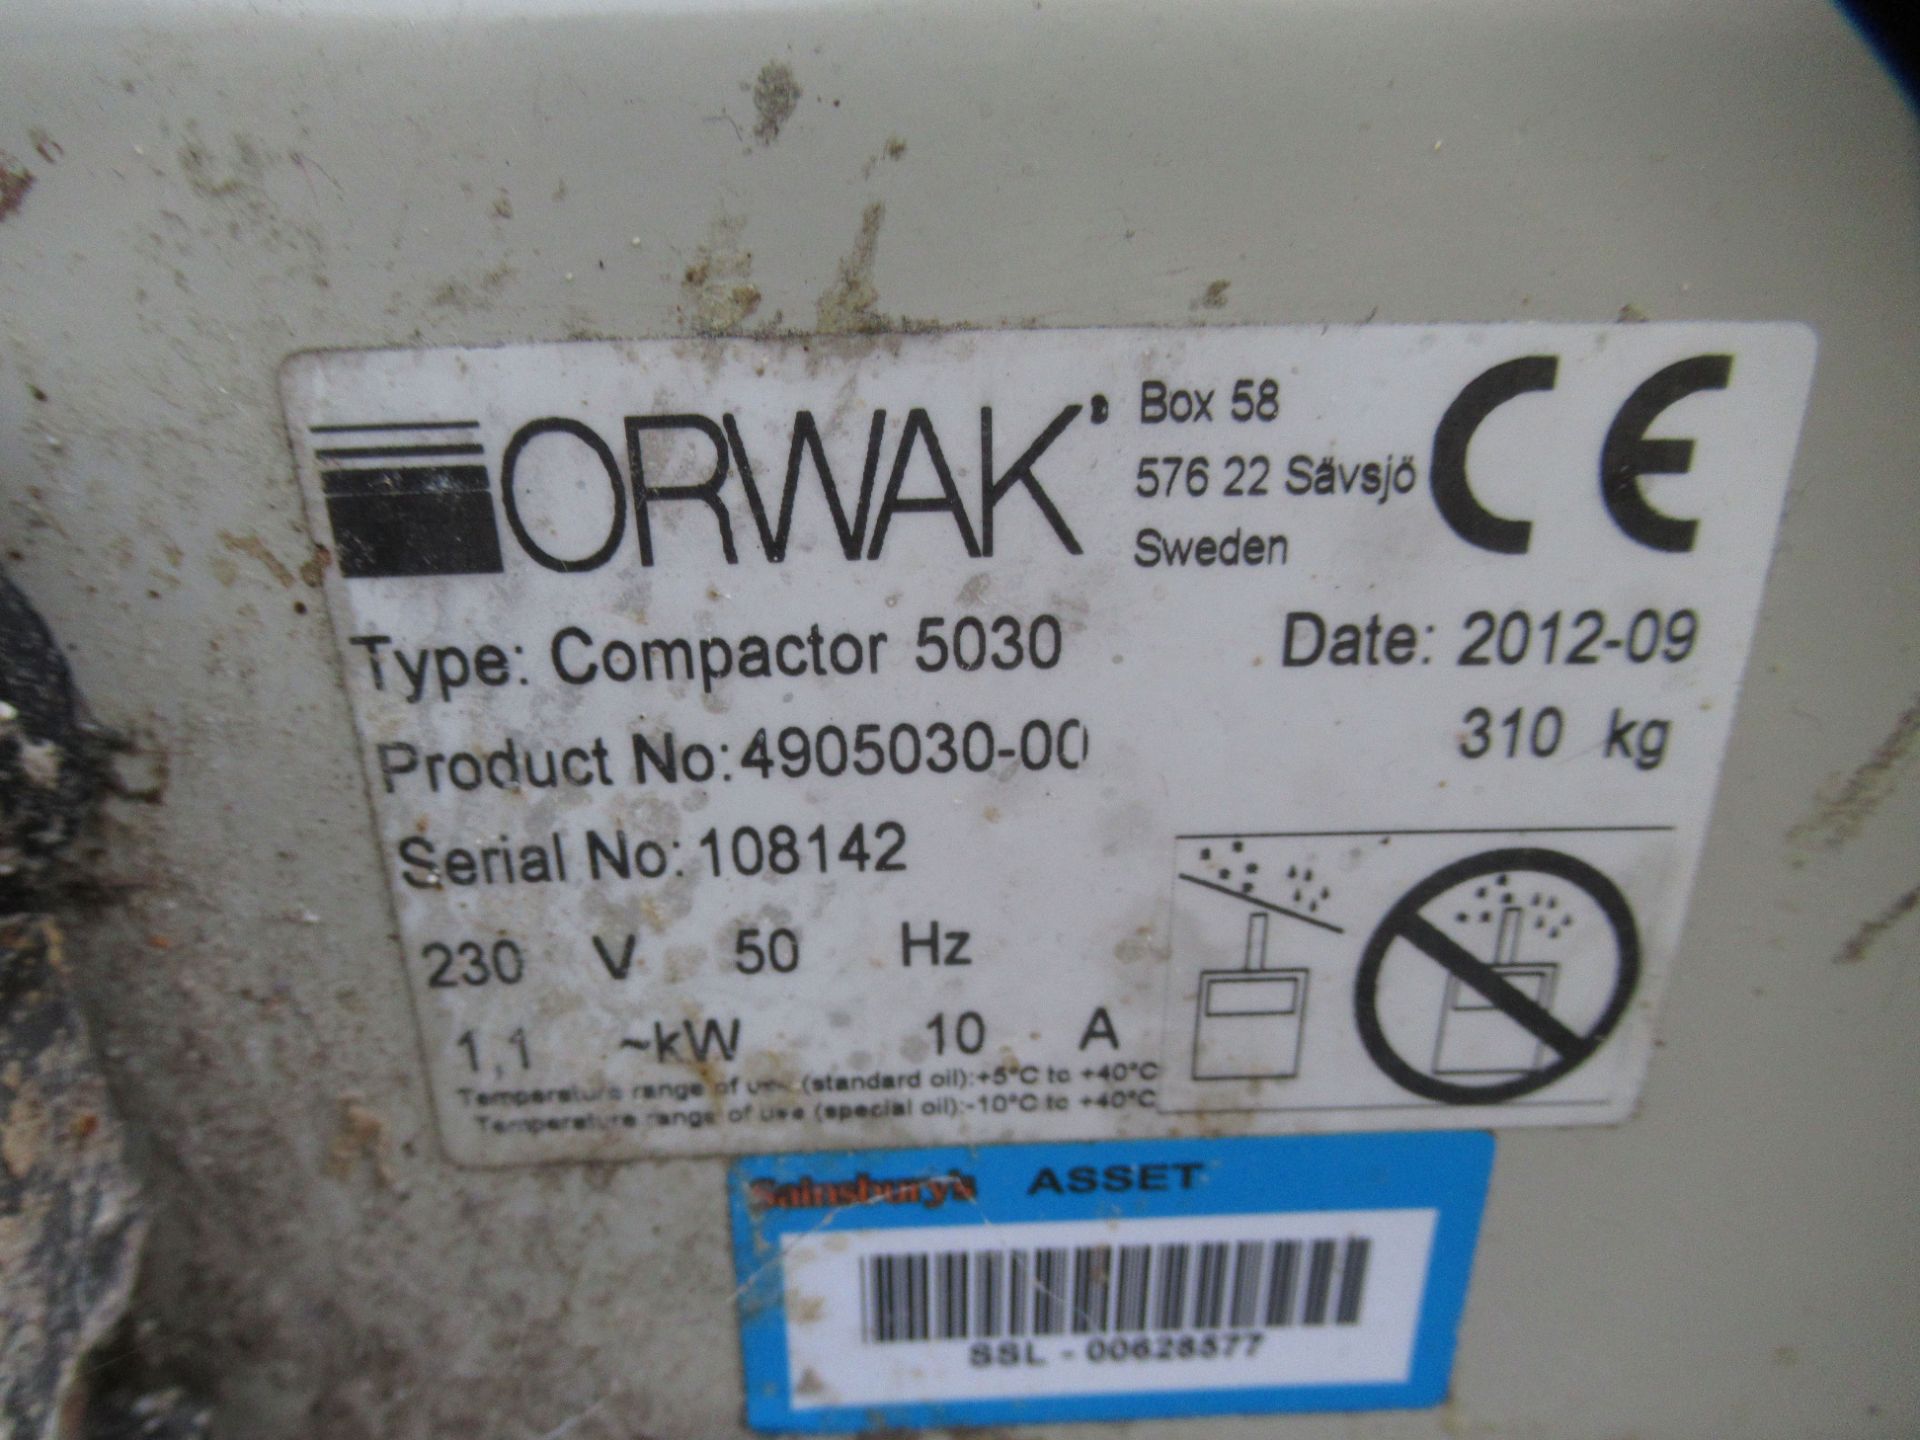 Orwak 5030 Compactor - Image 3 of 3